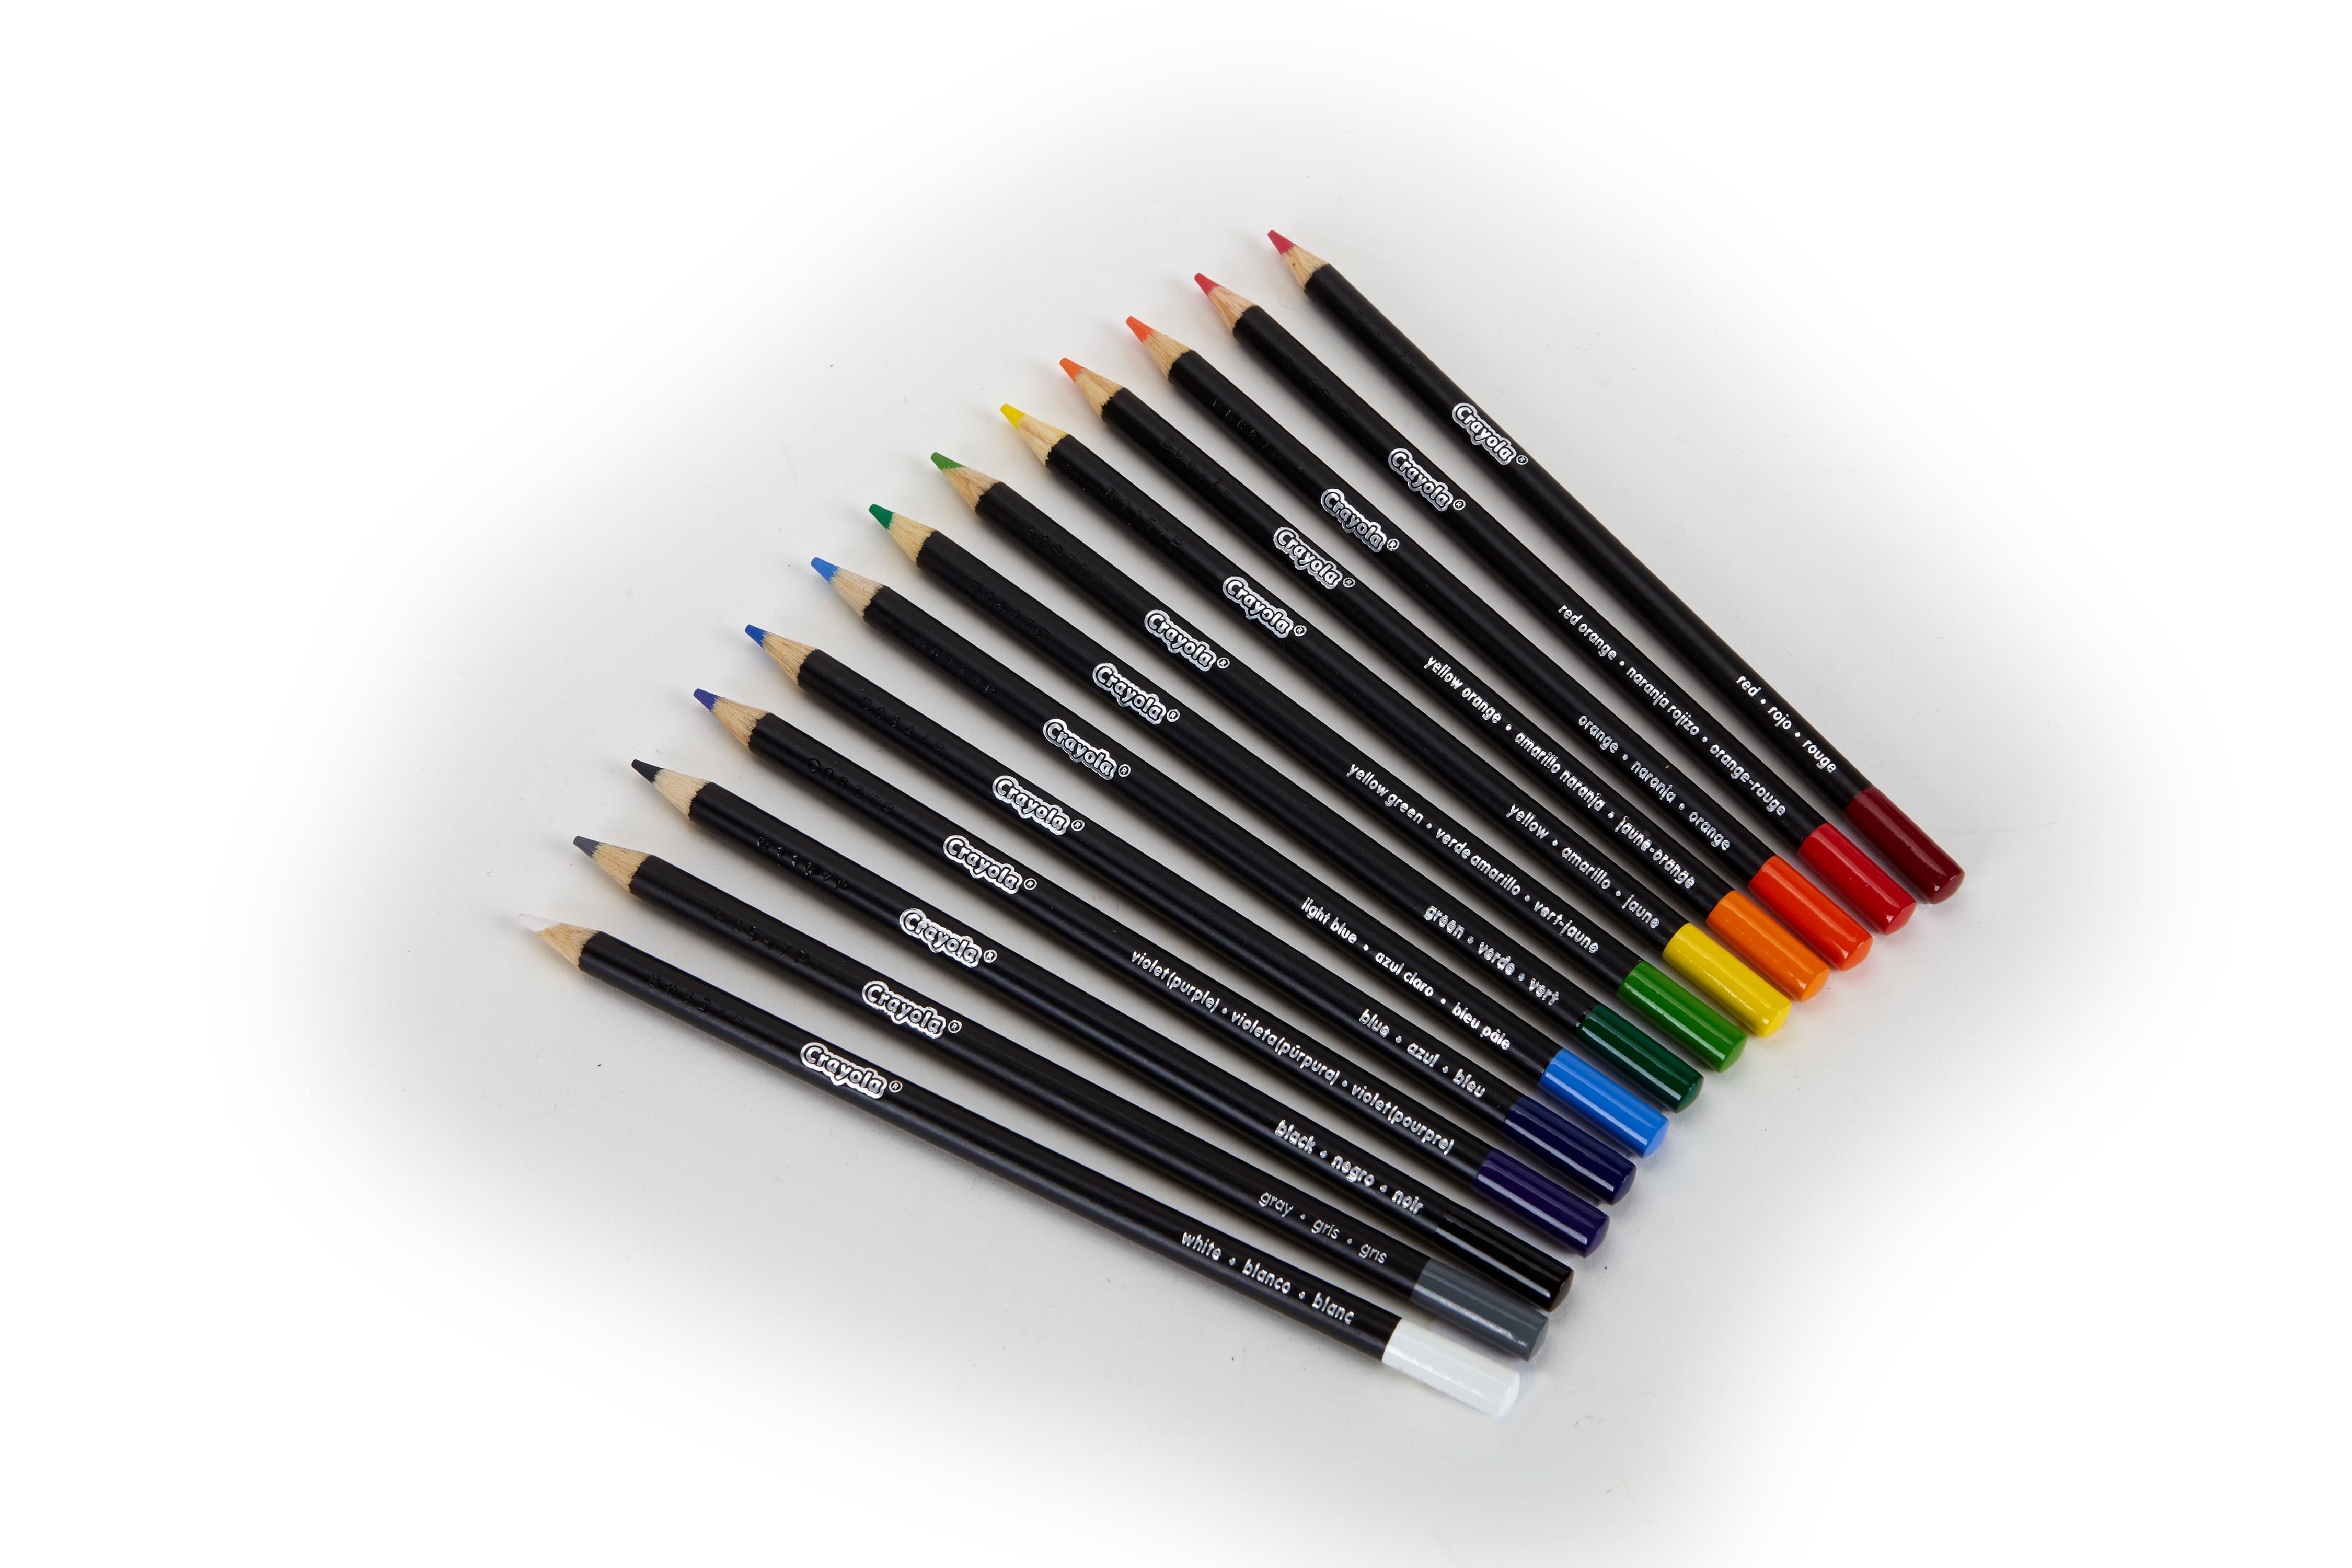 Crayola Brush Detail Dual Tip Markers Ultra Fine Marker Point Brush Marker  Point Style 16 Set - Office Depot